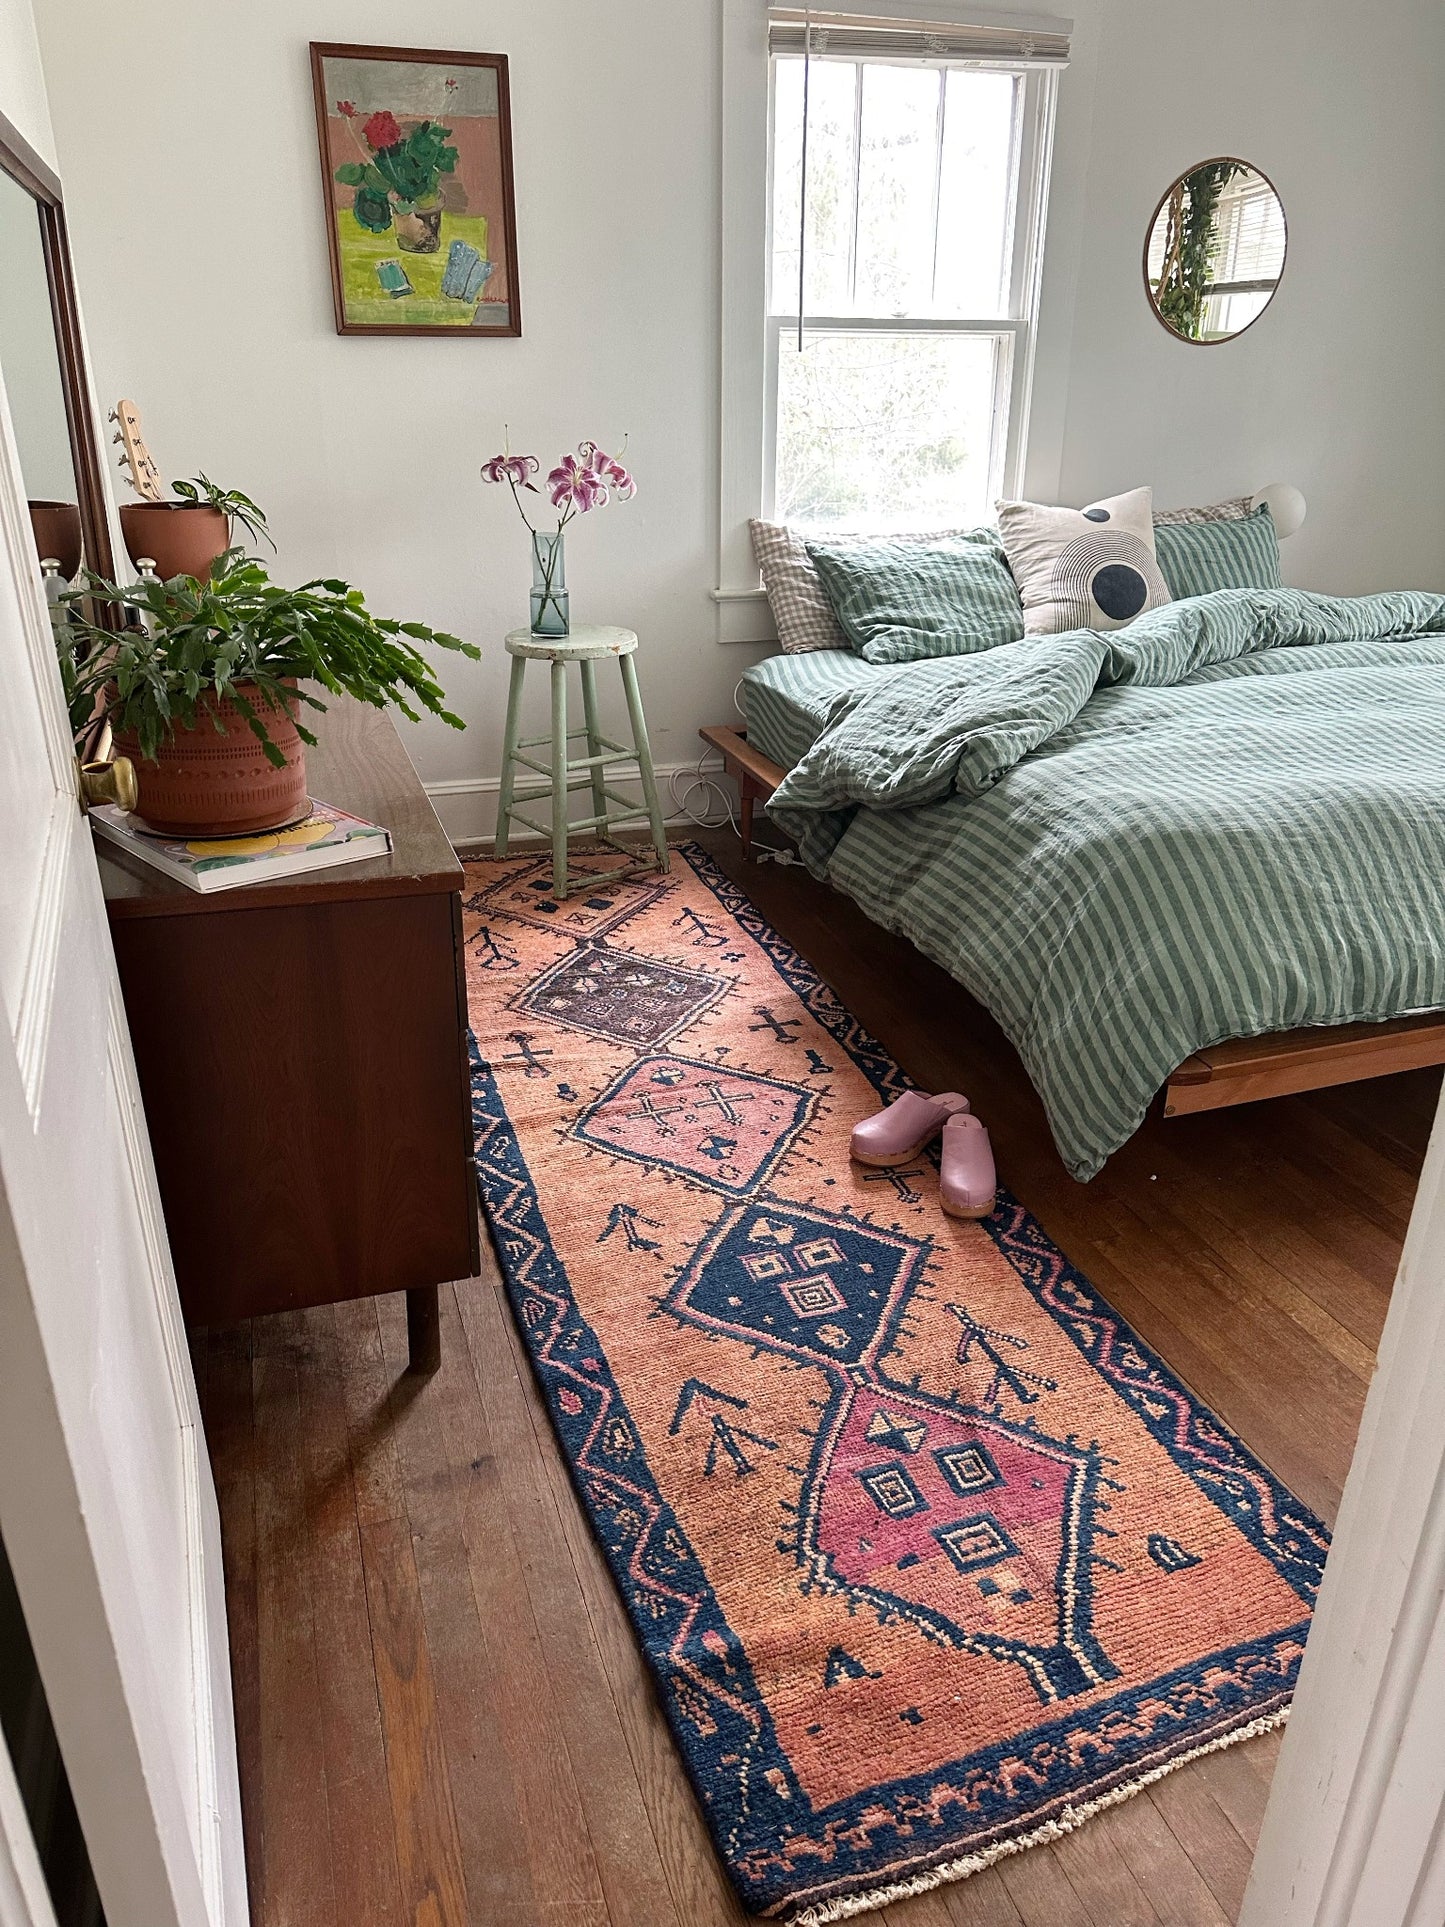 Pink rug styled next to bed. Vintage runner rug